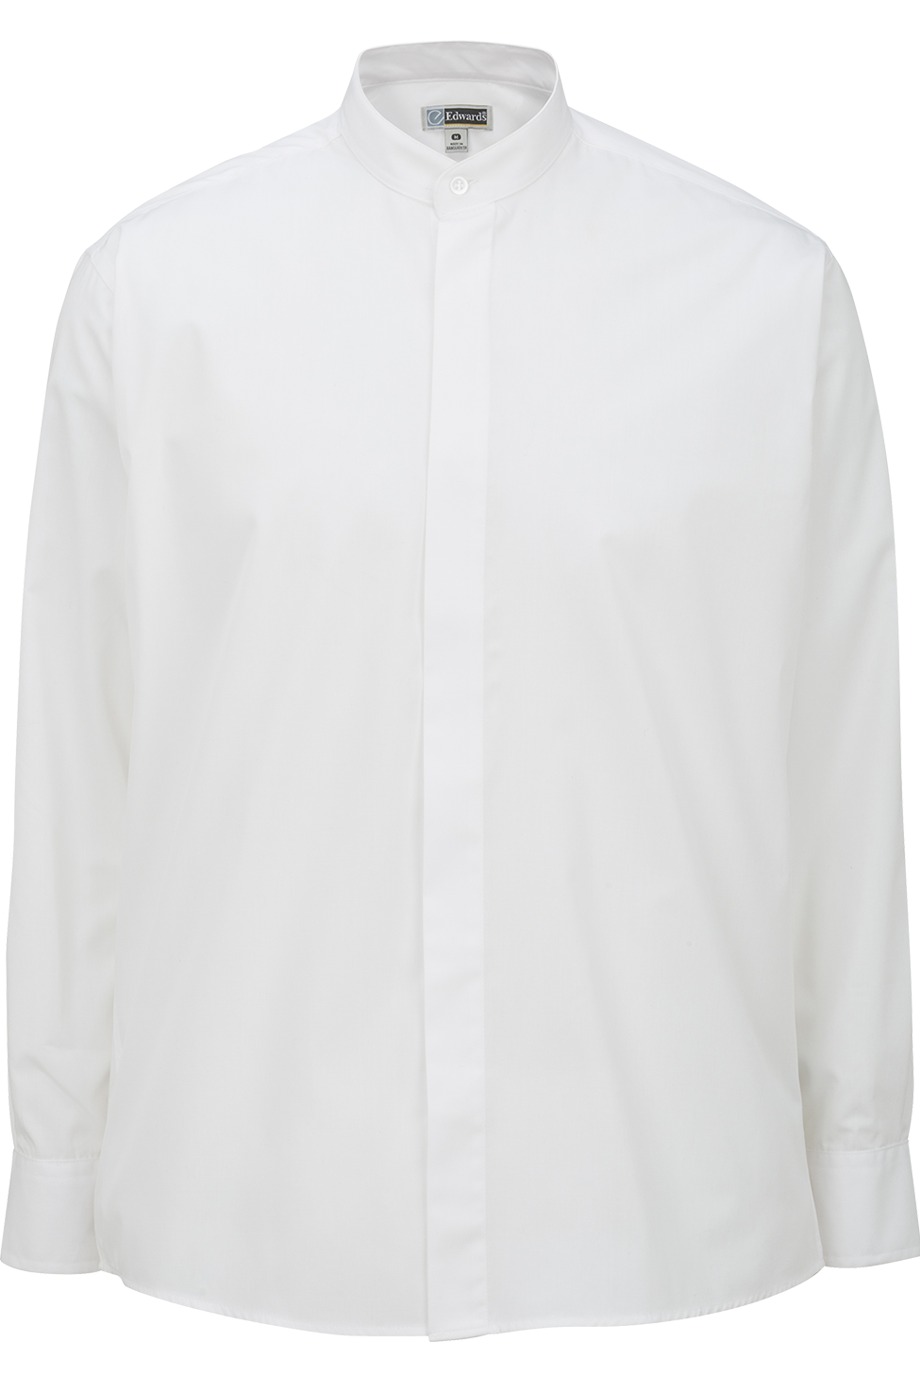 Edwards Garment 1396 - Men's Long Sleeve Banded Collar Shirt